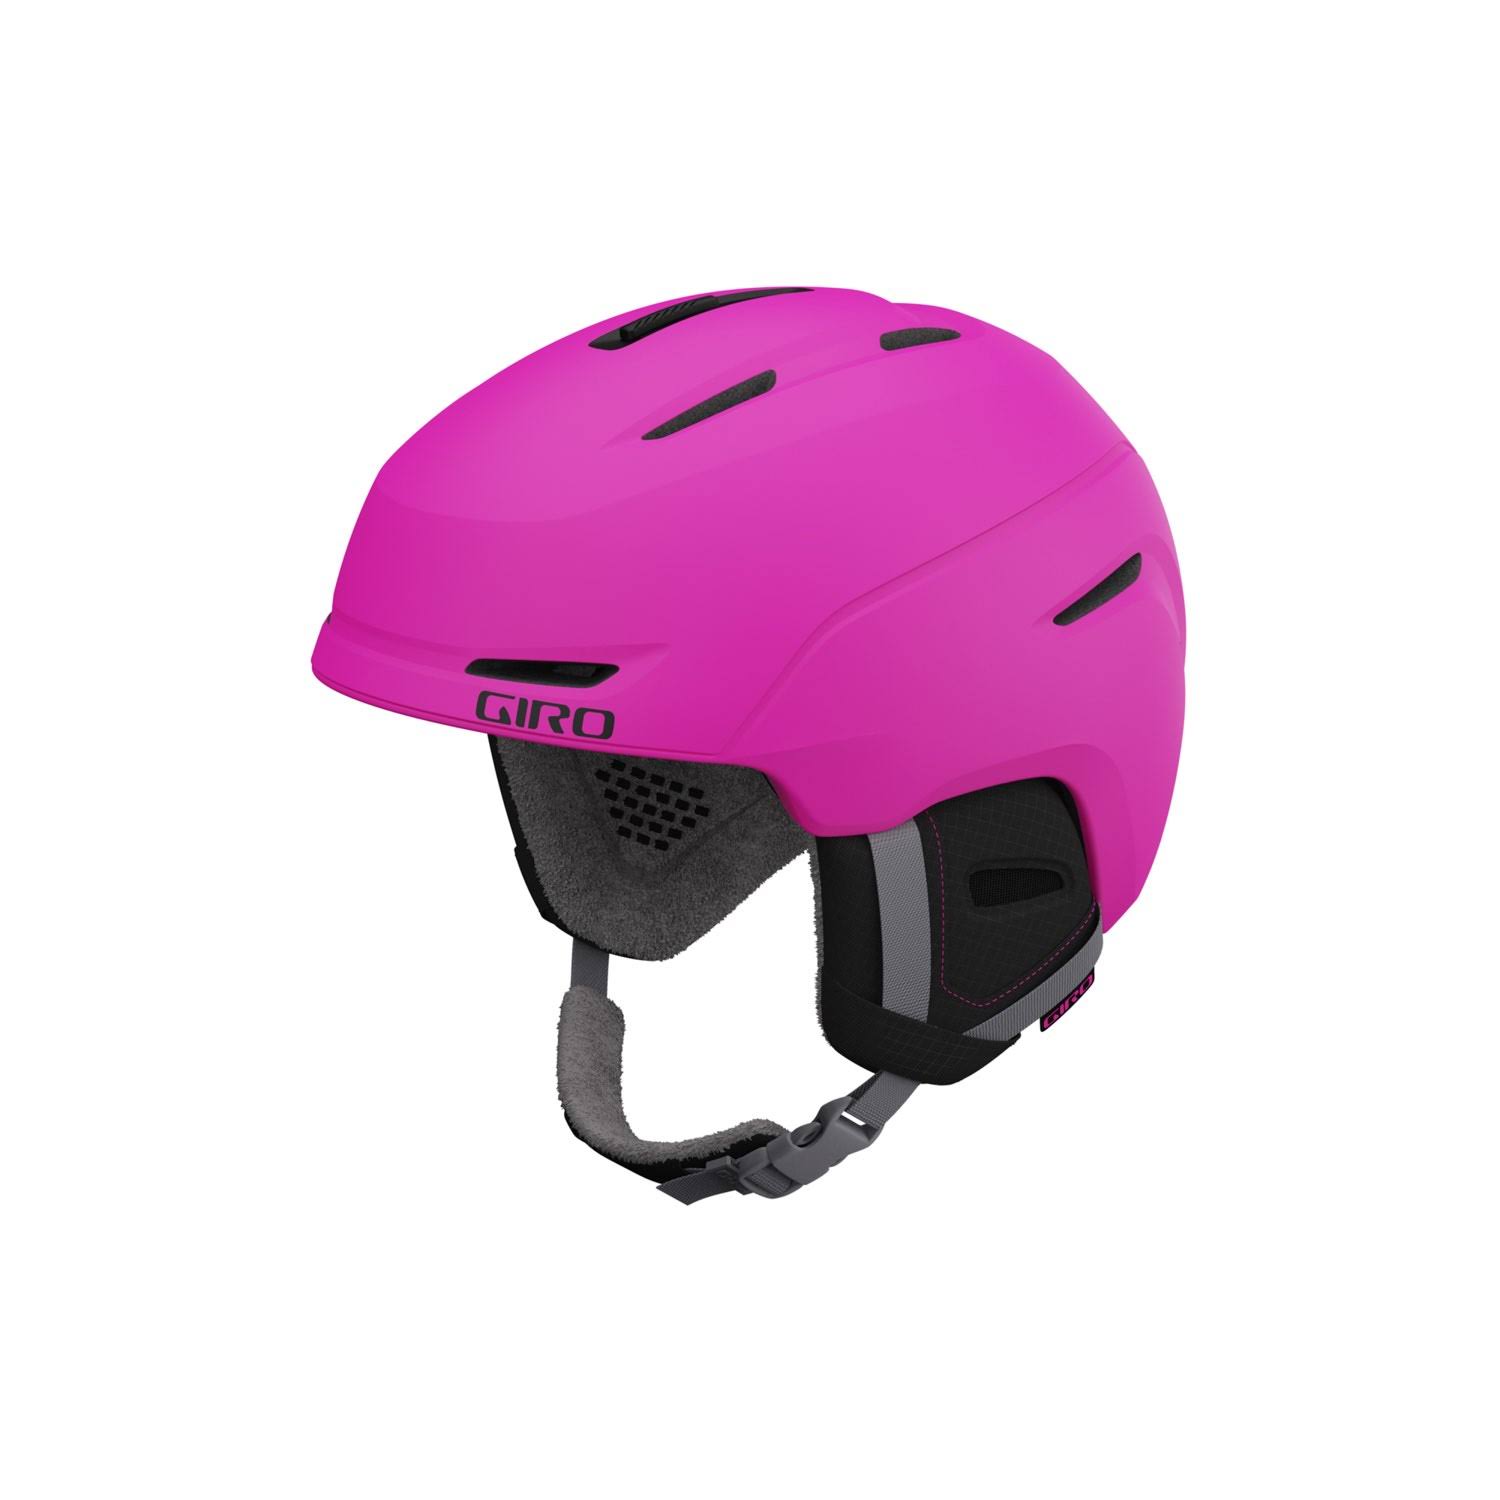 Giro Junior Neo pink, Kids Ski & Snowboard Helmet, Size S - Color Matte Bright Pink